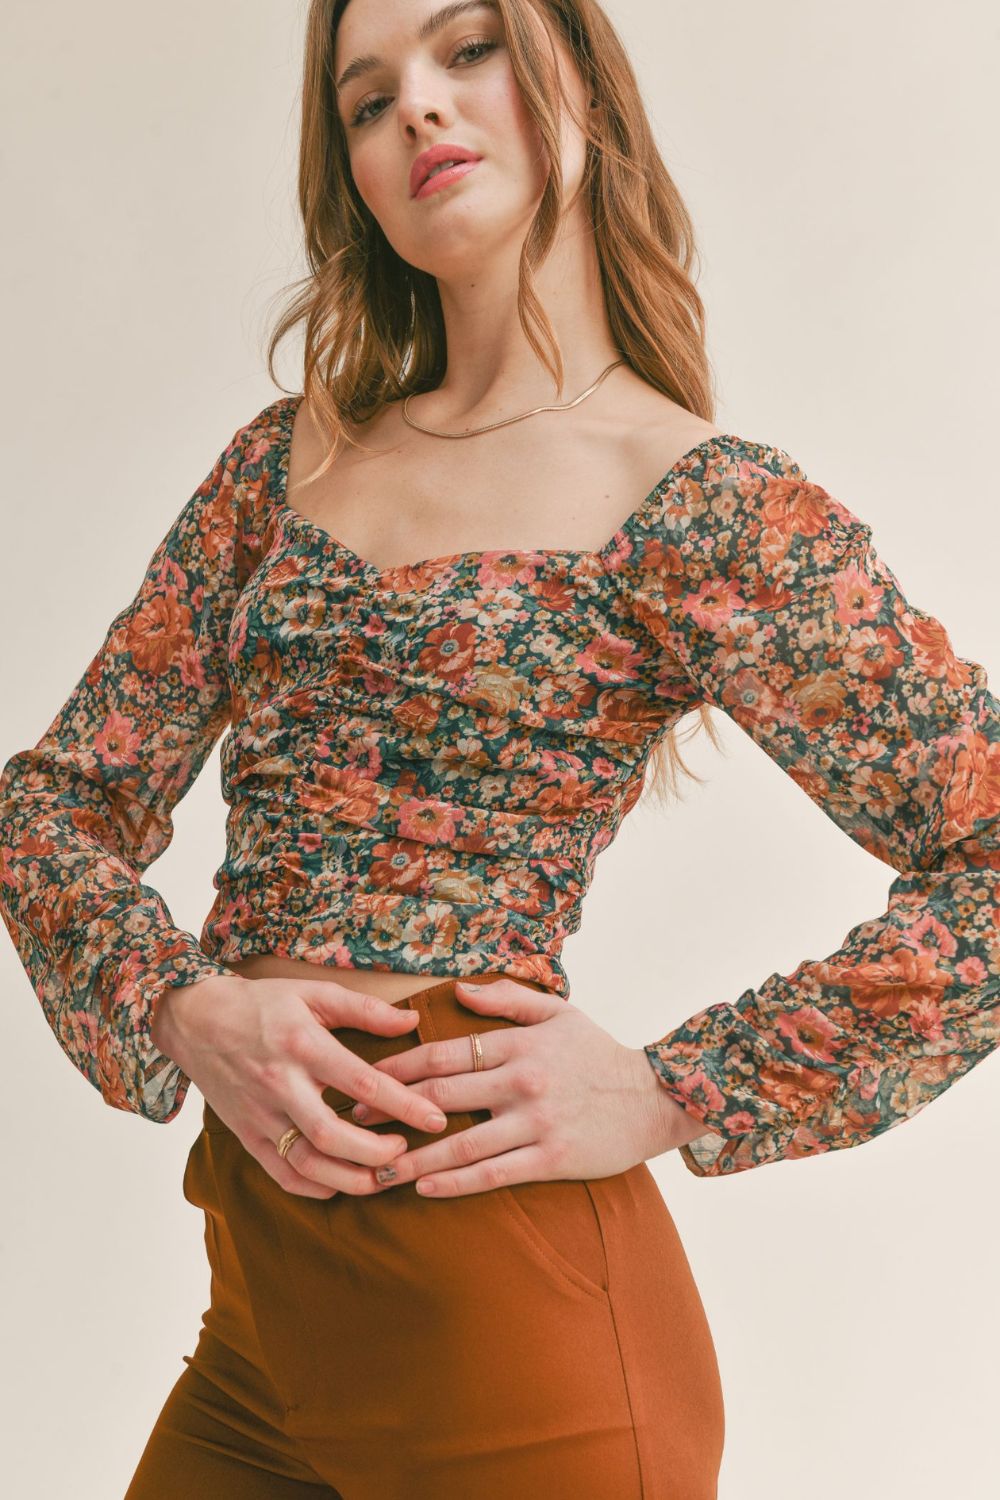 Women's Feminine Floral Top | Sheer Sleeves | Green Multi - Women's Shirts & Tops - Blooming Daily